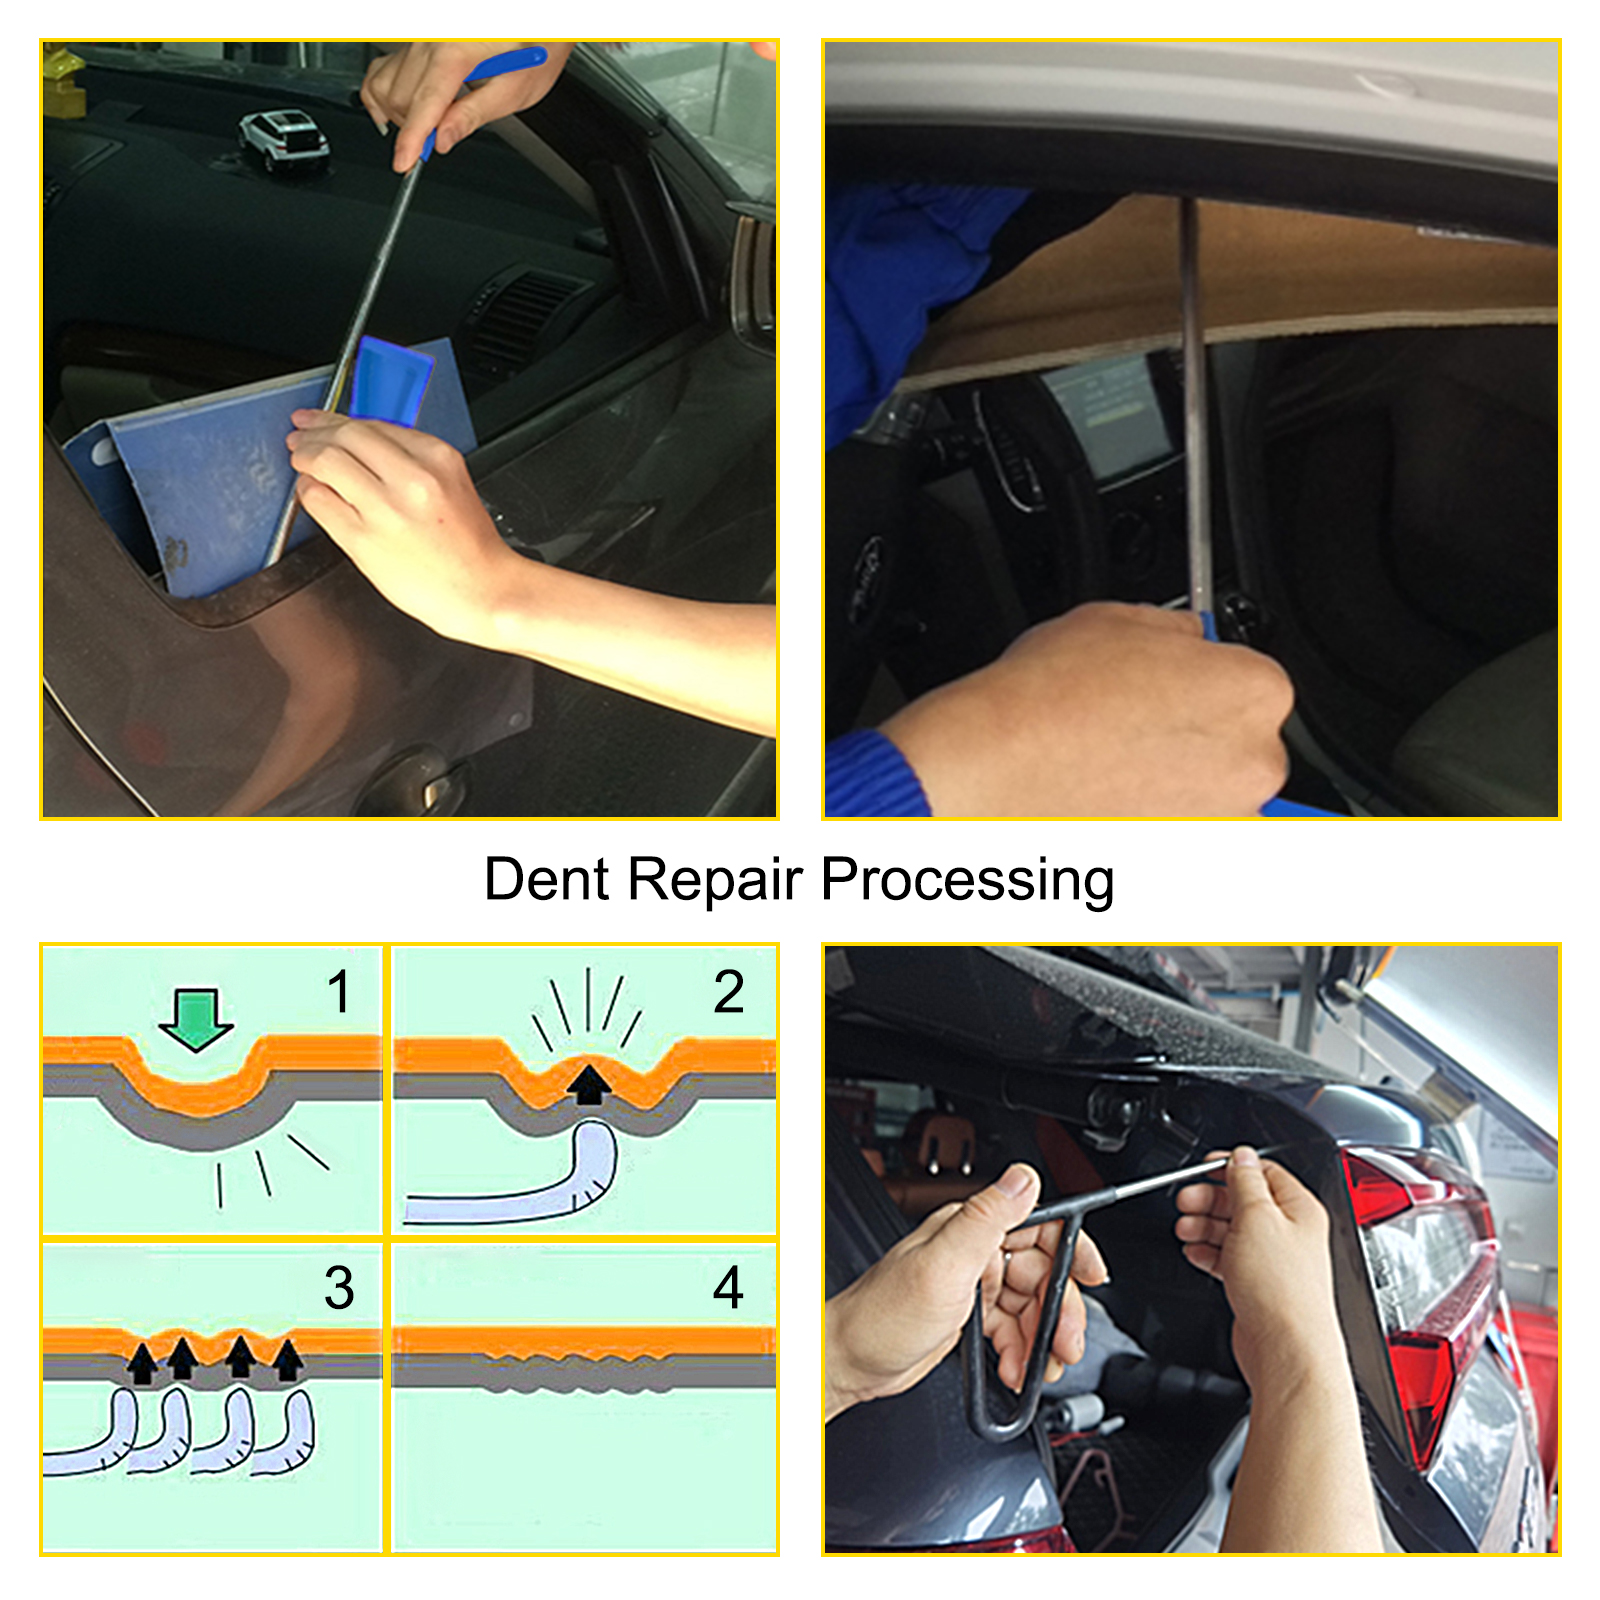 19pcs Paintless Dent Repair Tool Dent Puller Kit, Dent Car Dent Removal Kit,  Bridge Puller & Glue Gun For Auto Body Dent Remove